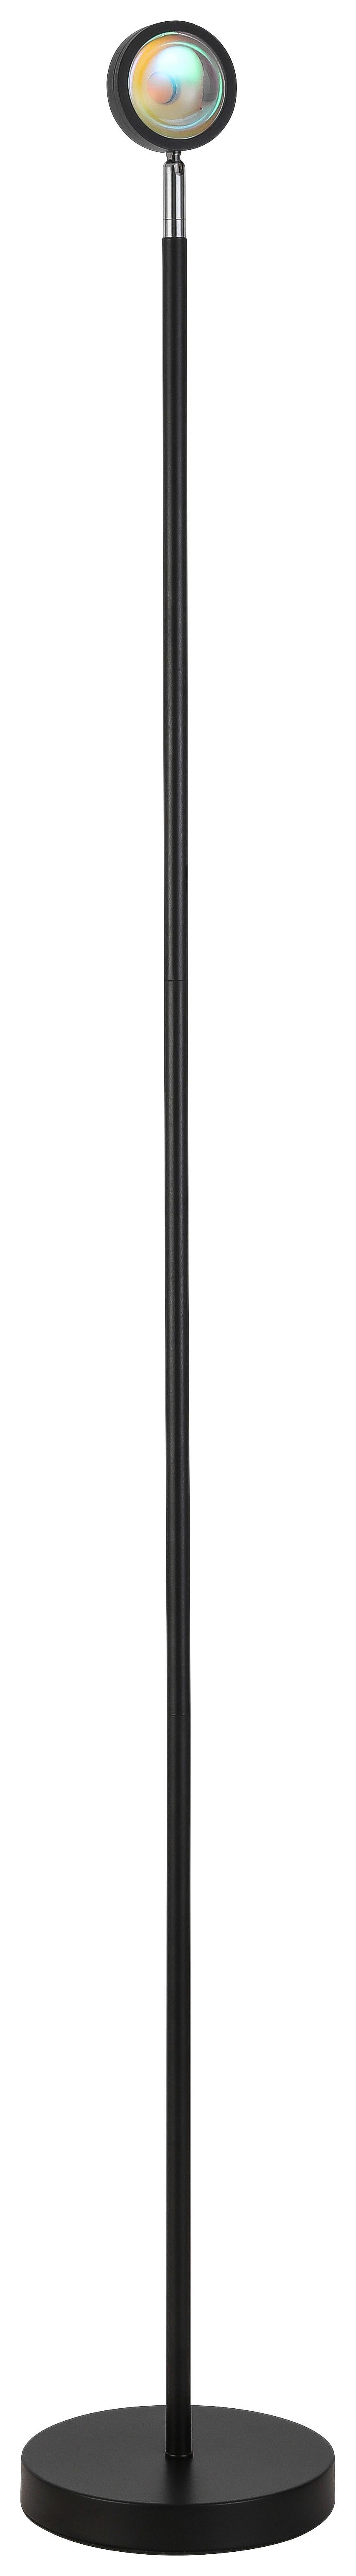 LED-Stehleuchte Mavis max. 7,5 Watt - Schwarz, Modern, Metall (18/140cm) - Modern Living